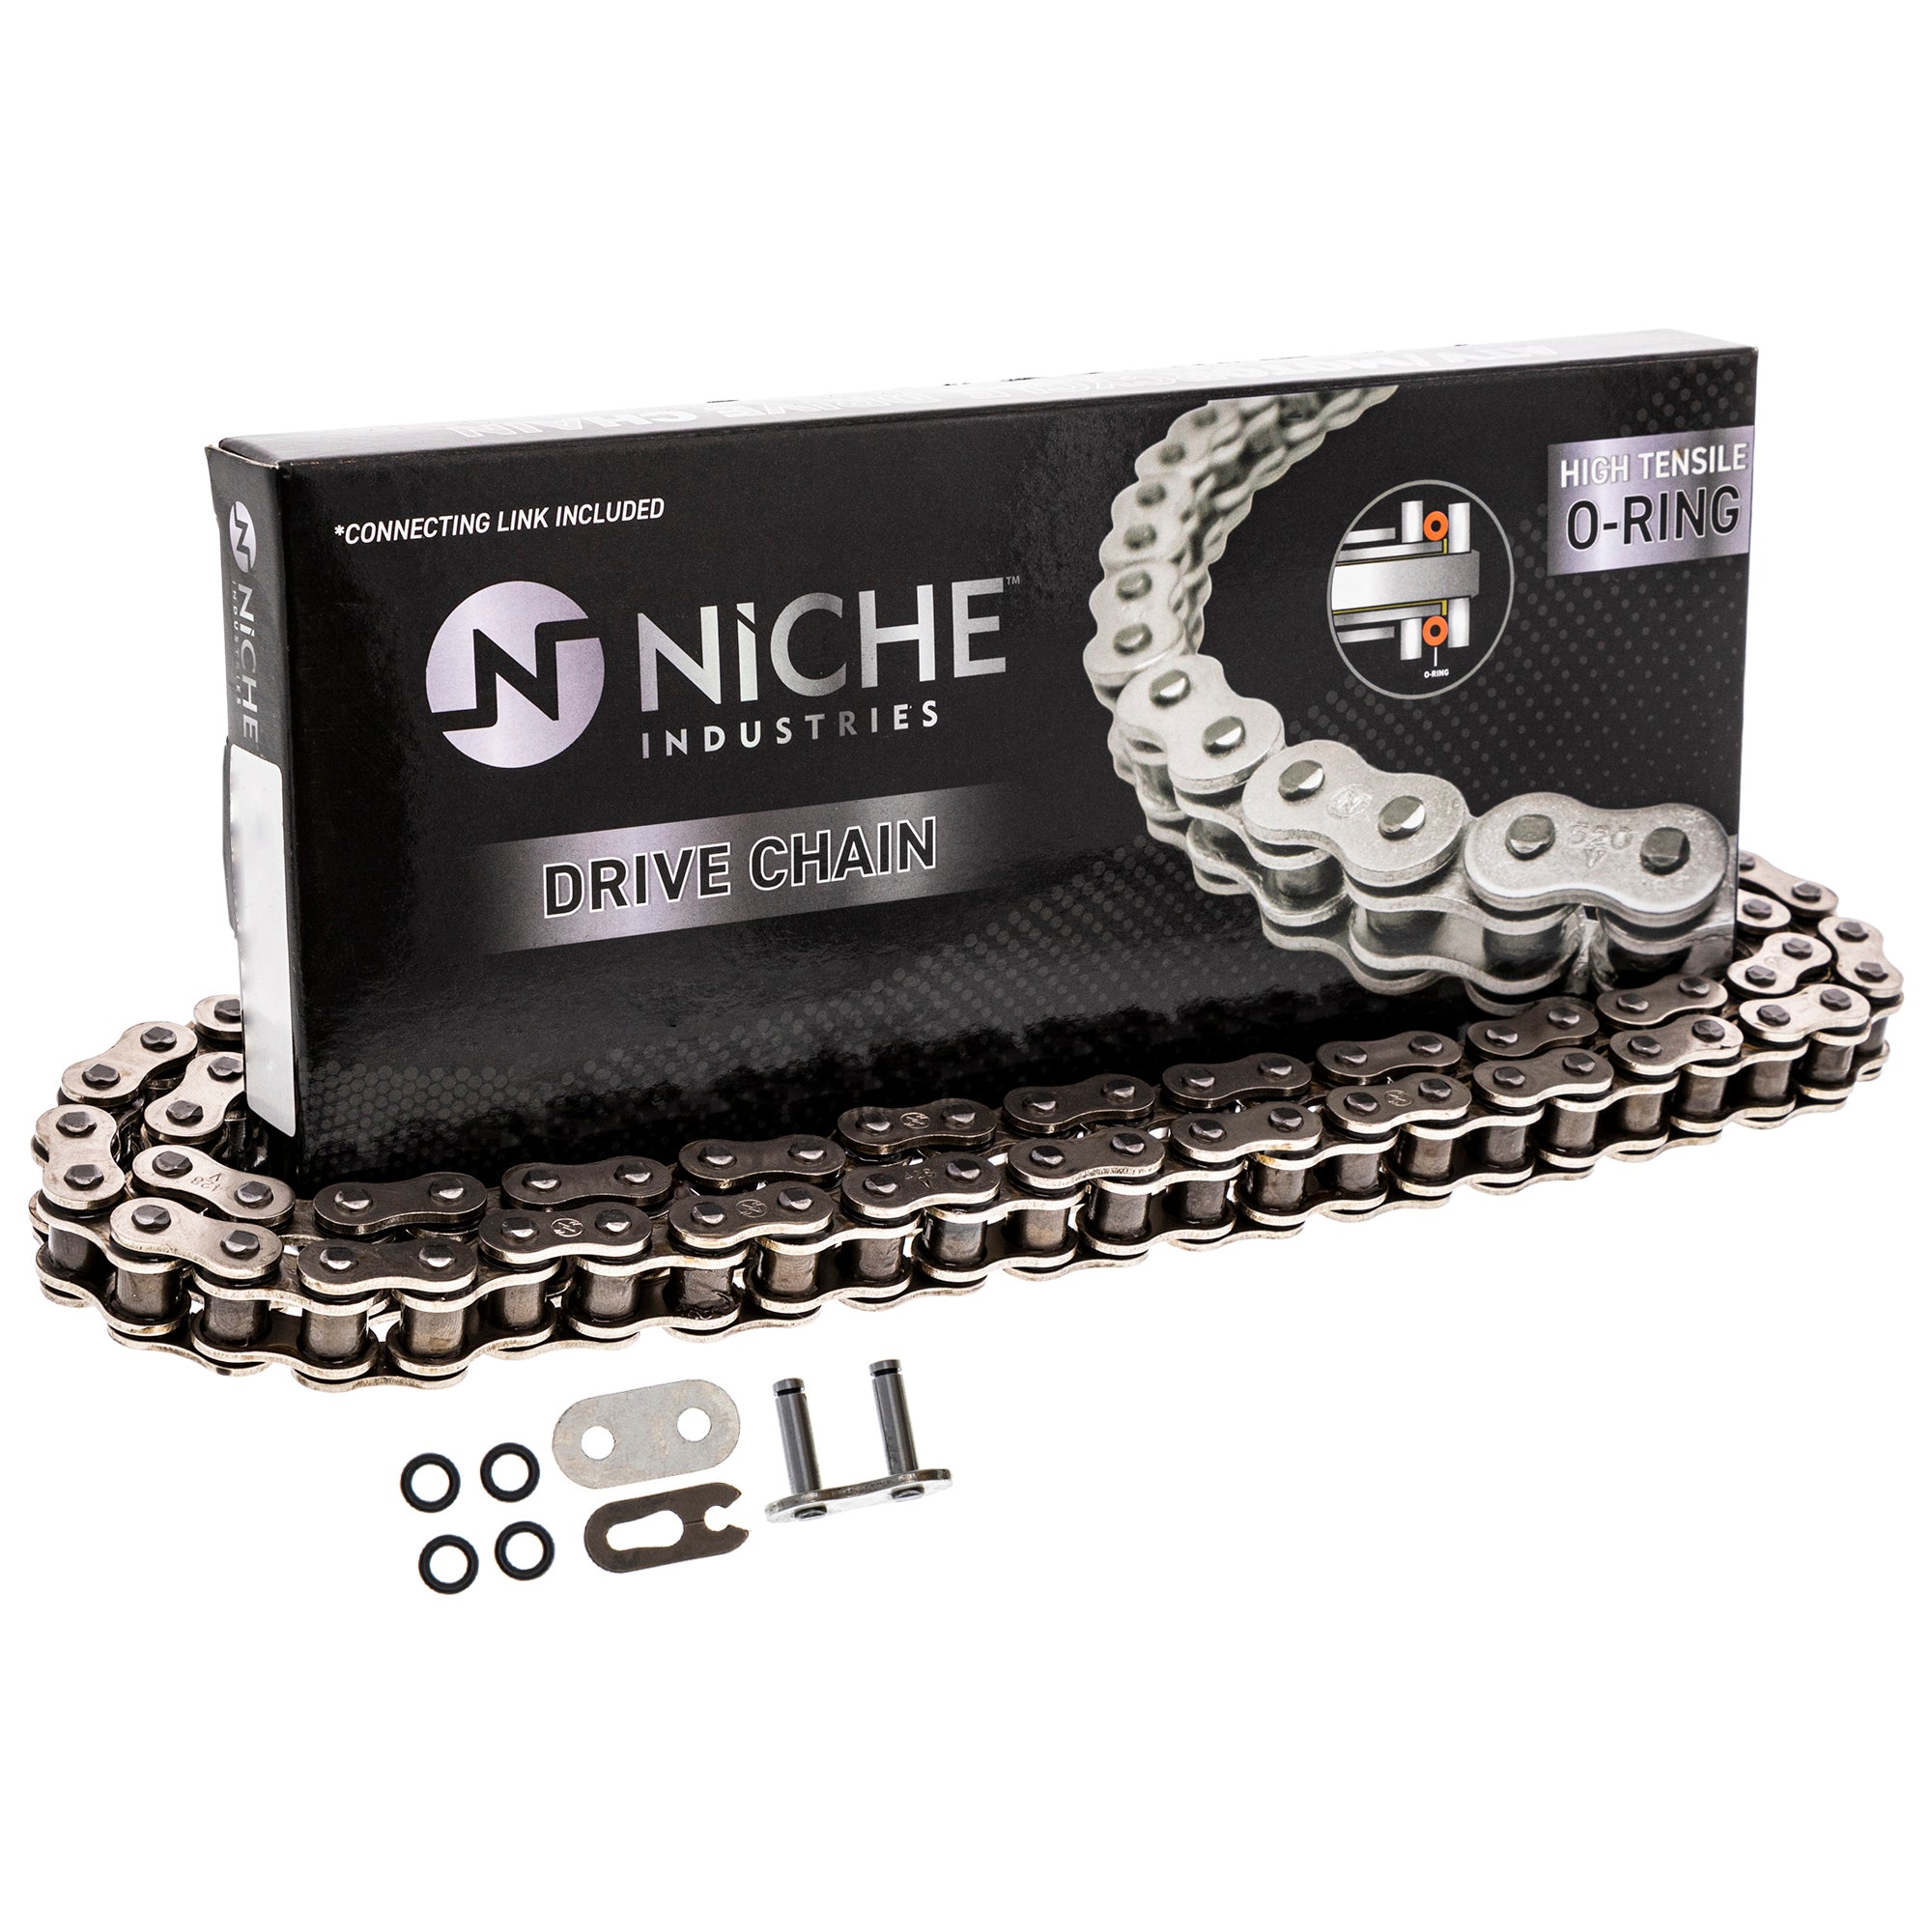 NICHE Chain 40530-HB6-005 40530-HB6-003 27600-27412